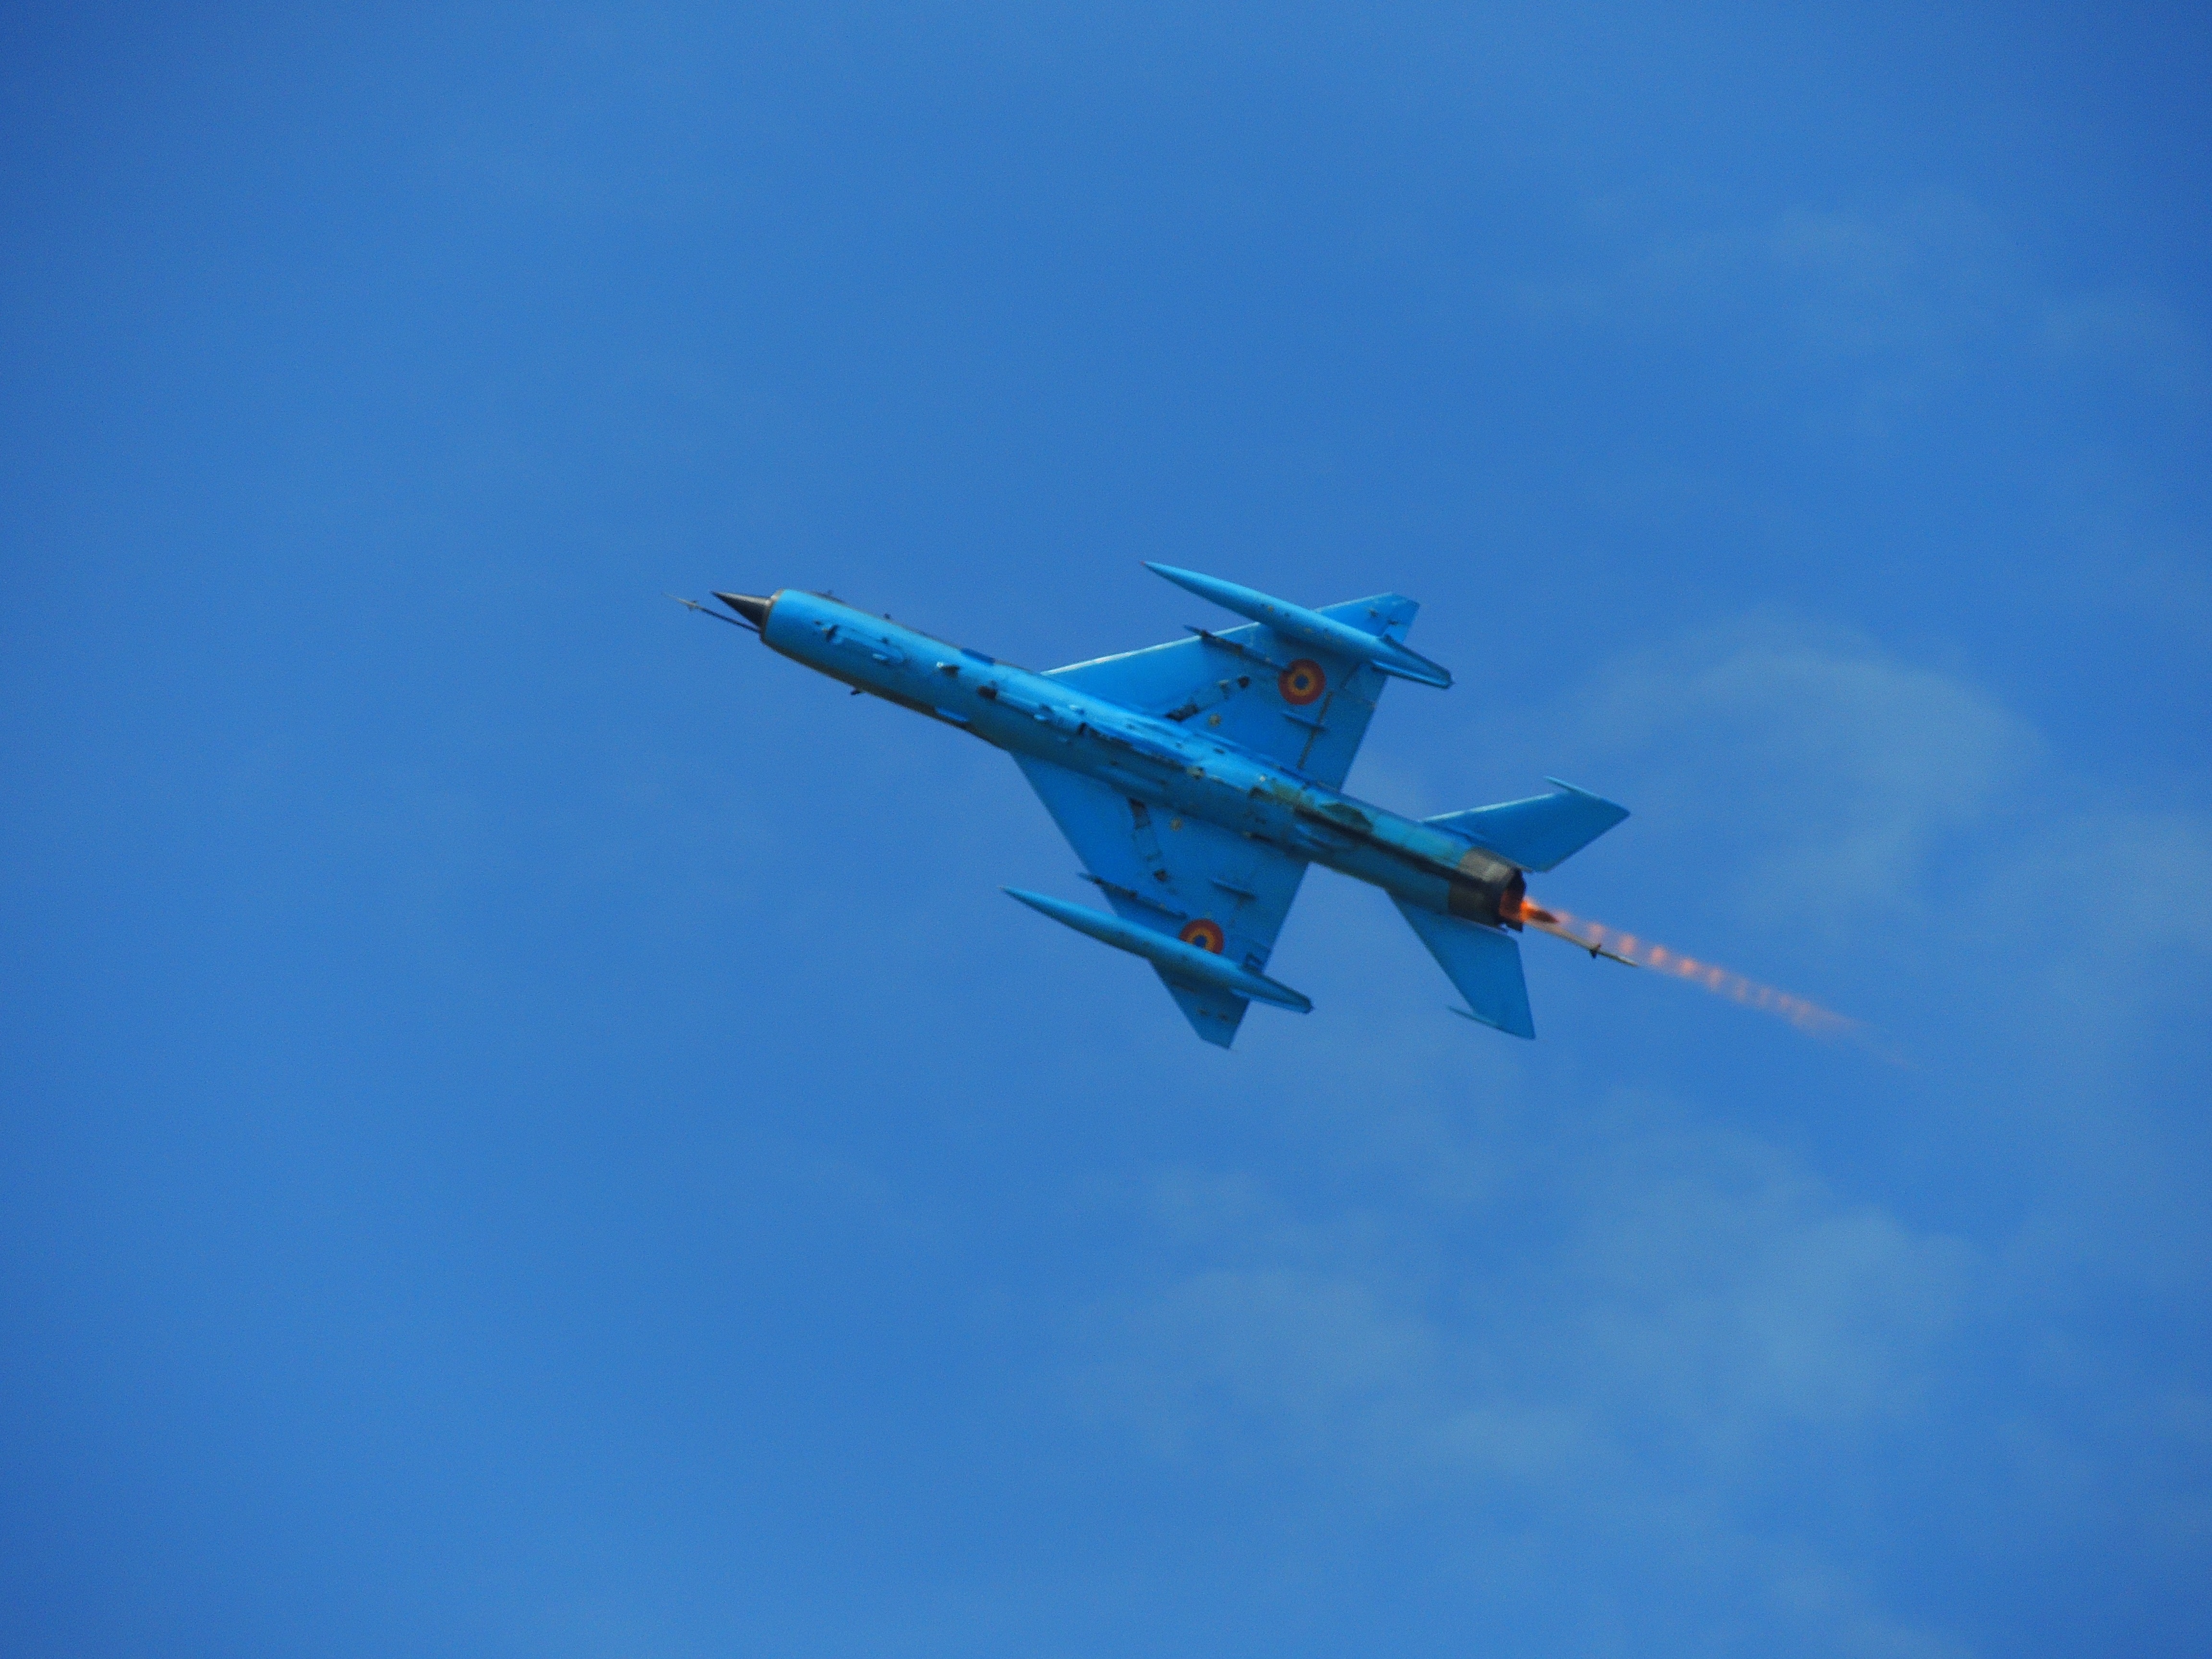 blue jet plate taking flight at sky during daytime